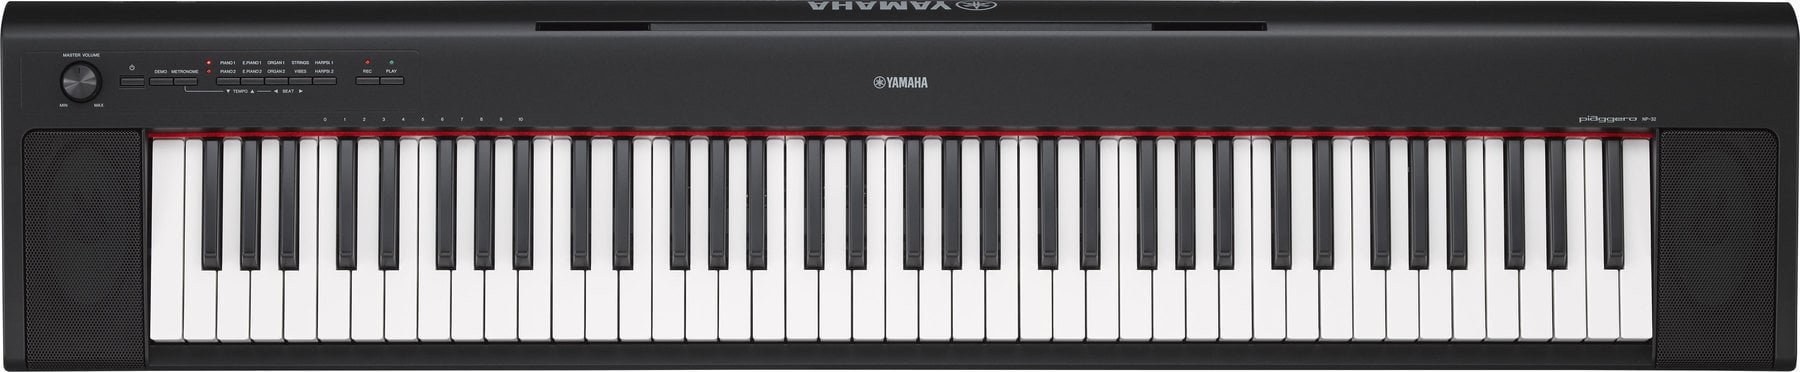 Digitralni koncertni pianino Yamaha NP-32 B Digitralni koncertni pianino